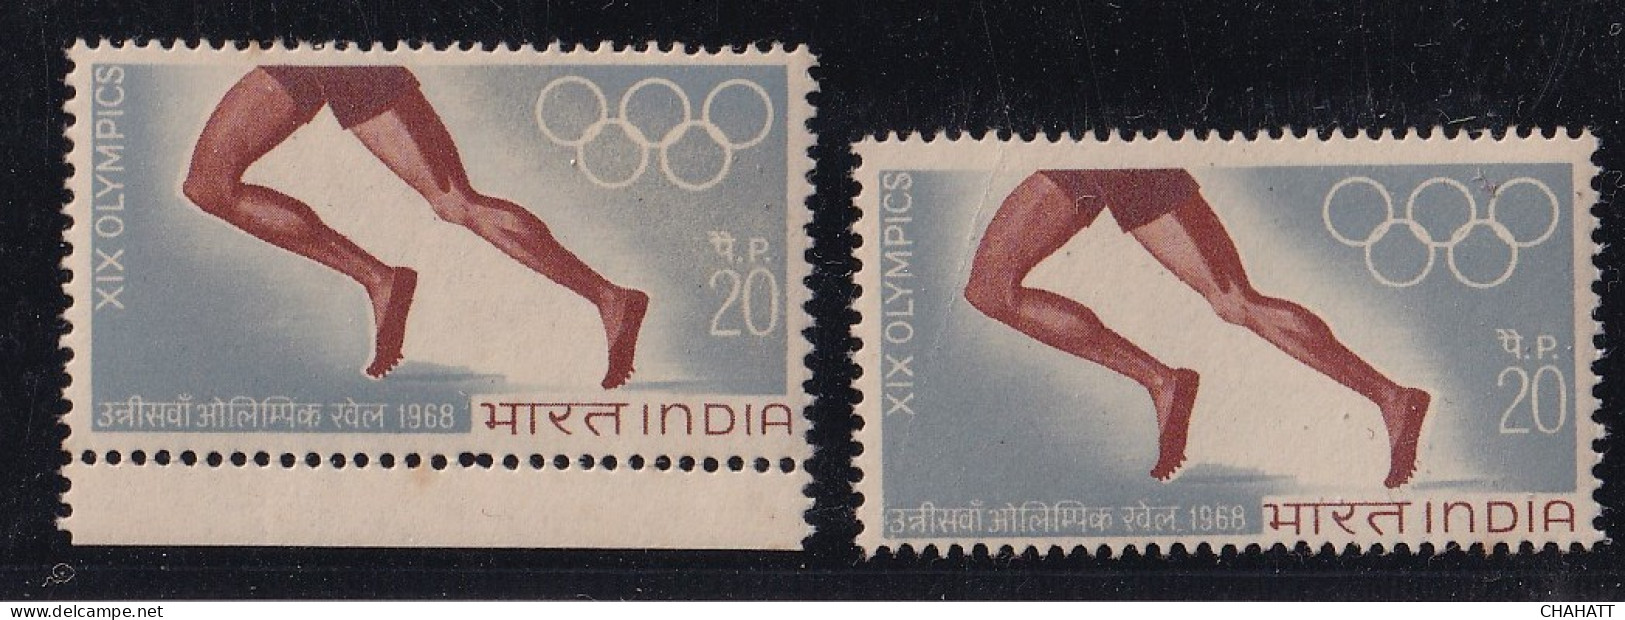 INDIA-19th OLYMPICS- 20p- ERROR-FRAME SHIFTING-MNH-IE-51 - Variétés Et Curiosités